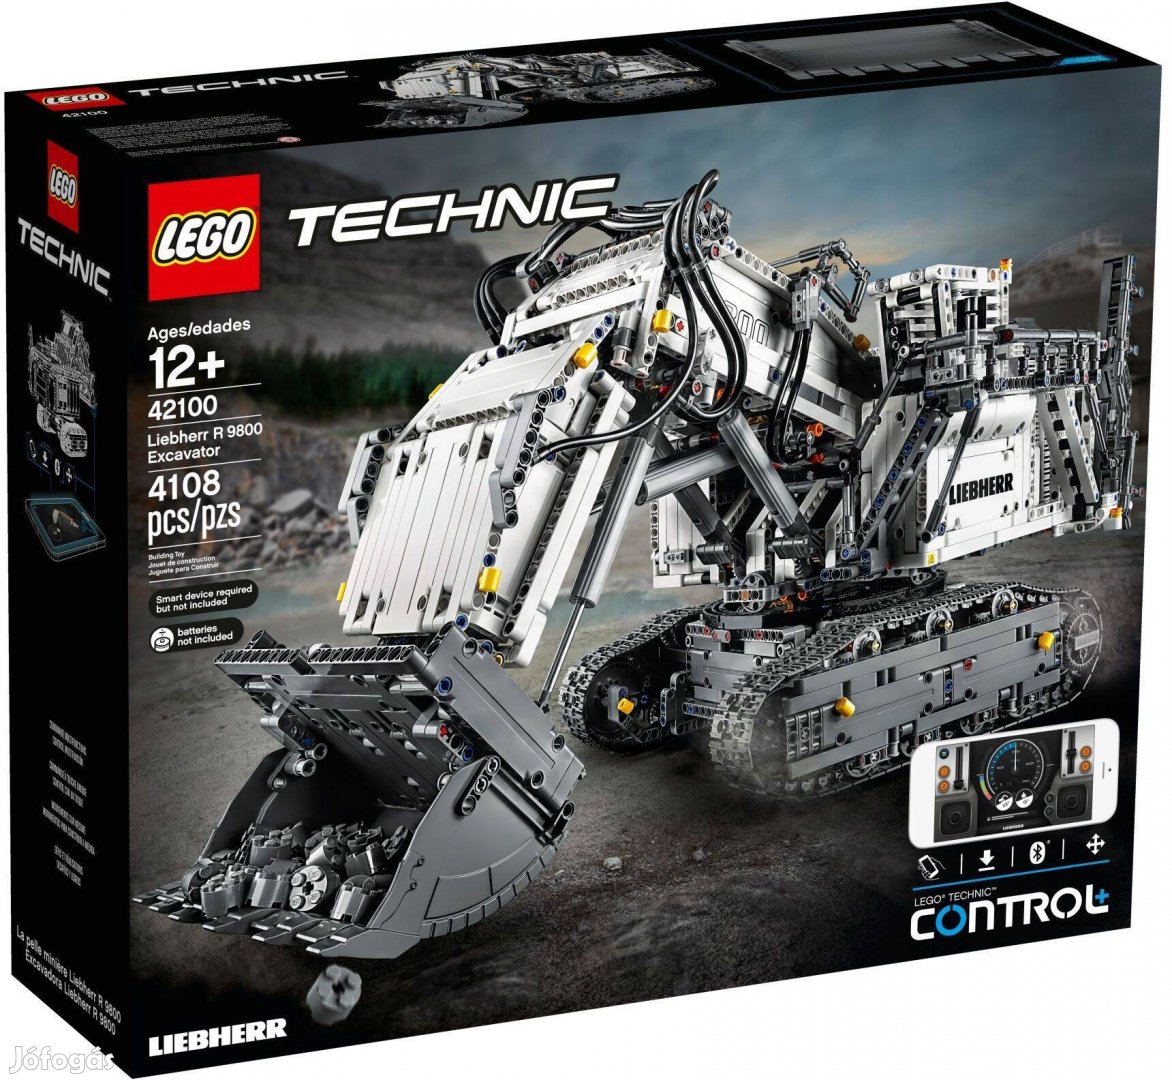 LEGO Technic 42100 Liebherr R 9800 bontatlan, új